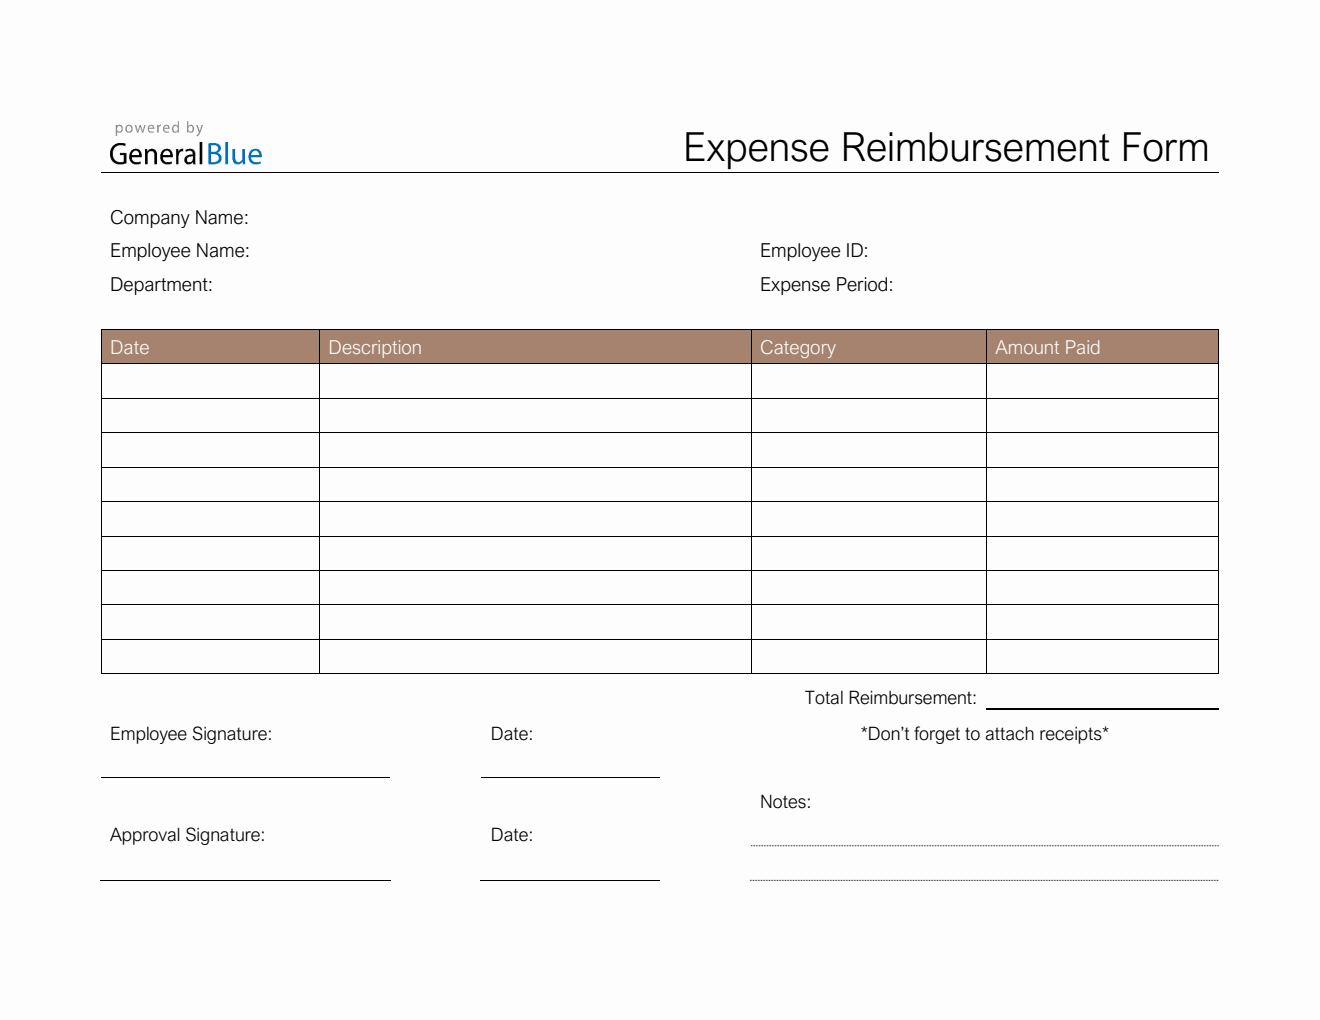 Simple Expense Reimbursement Form in PDF (Simple)